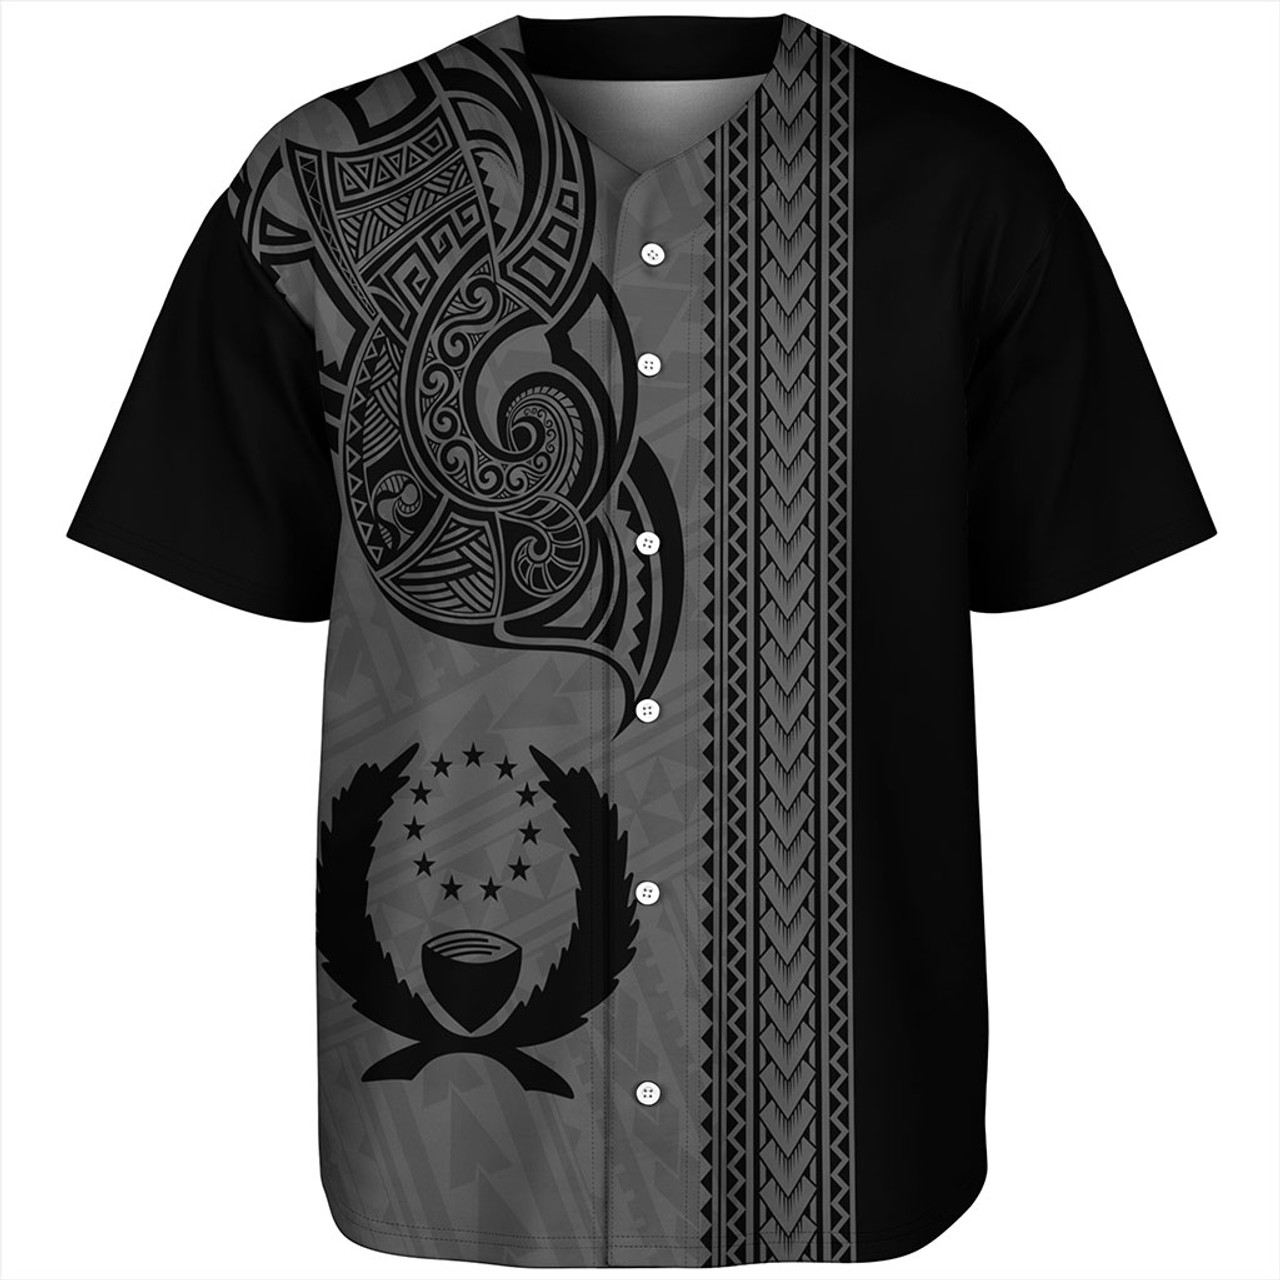 Pohnpei State Baseball Shirt Polynesia Coat Of Arms Tribal Tattoo